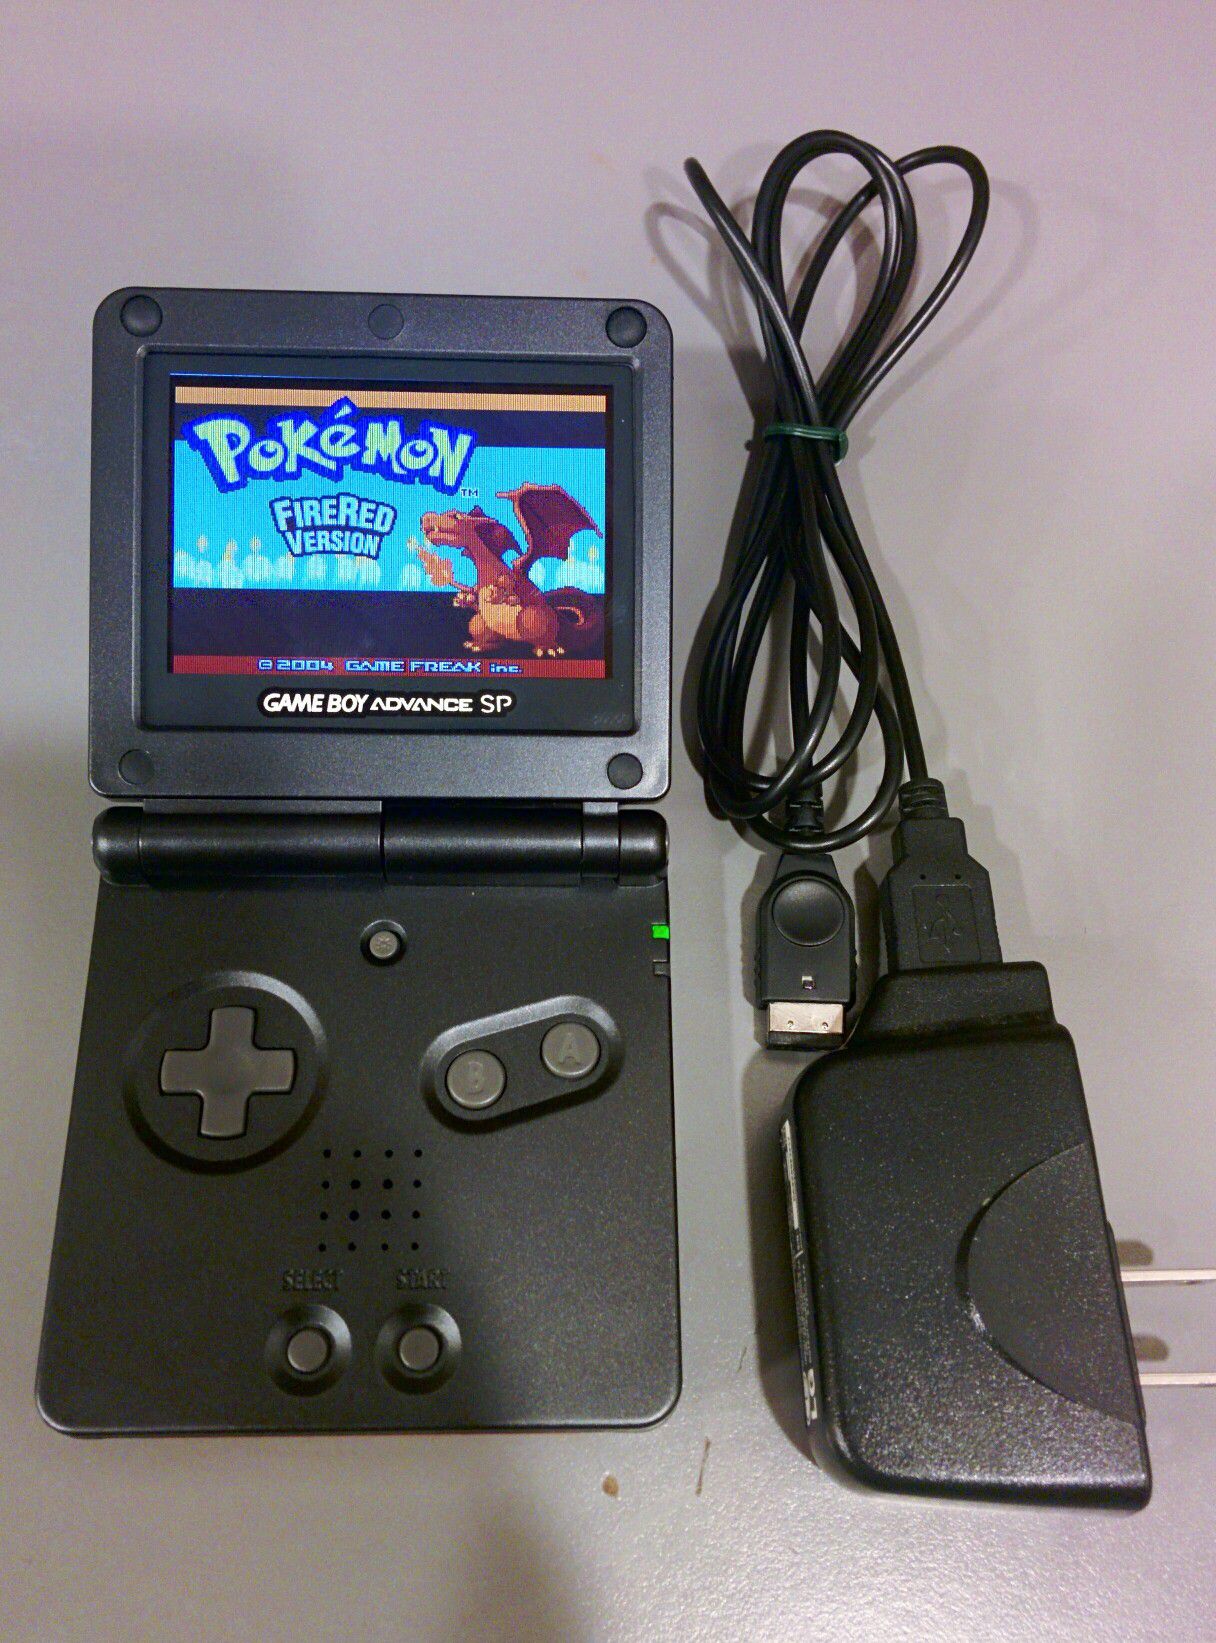 Pokemon FireRed Version - Game Boy Advance | Nintendo | GameStop